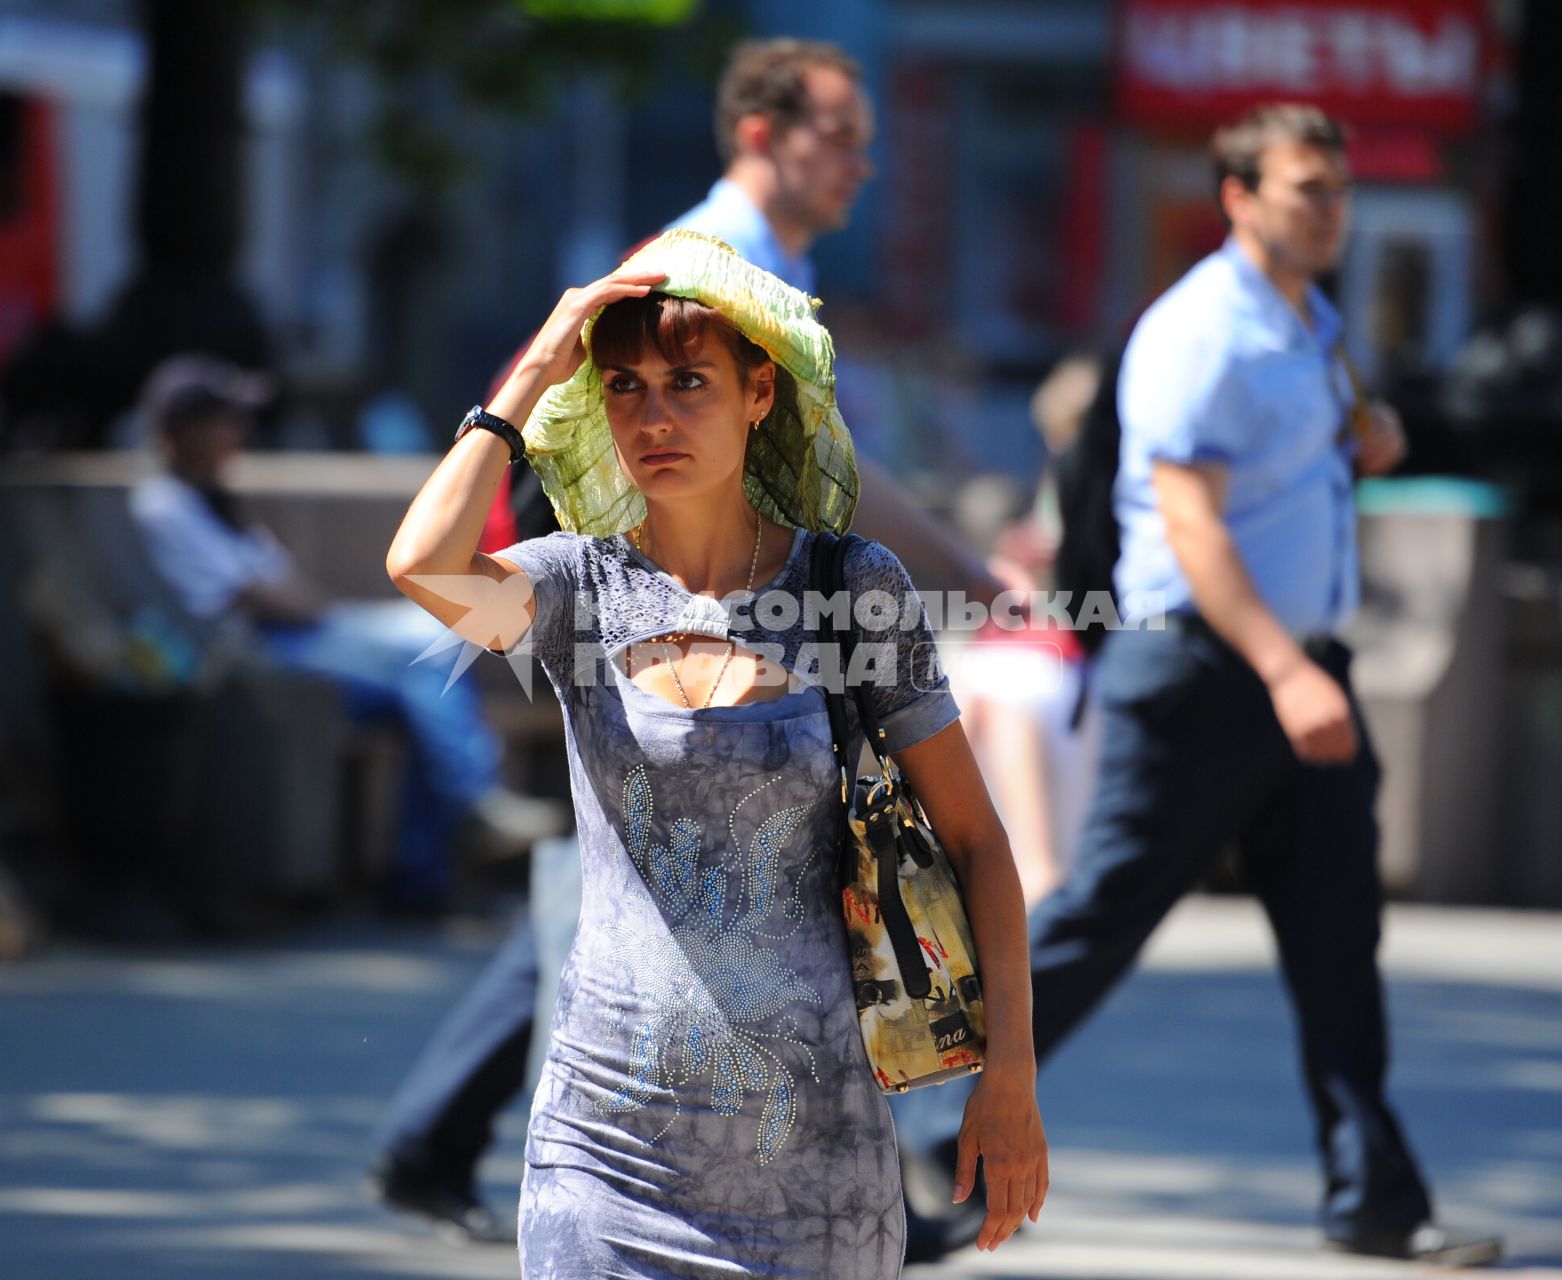 Жара в Москве. На снимке: девушка идет по улице с платком на голове.